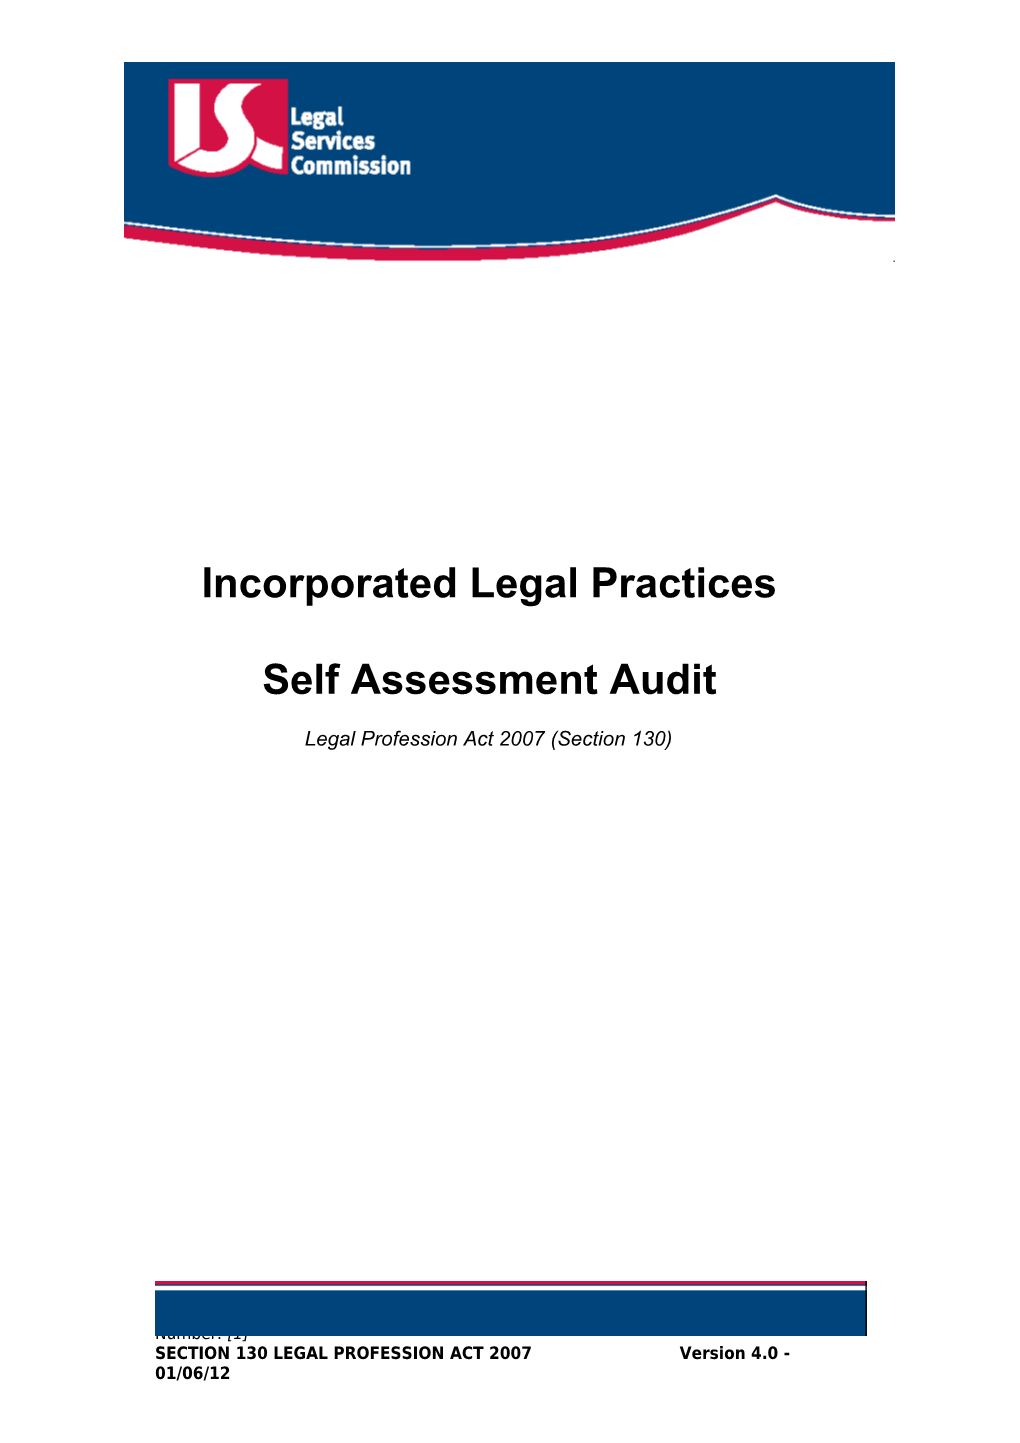 ILP Self Assessment Audit Form Version 4